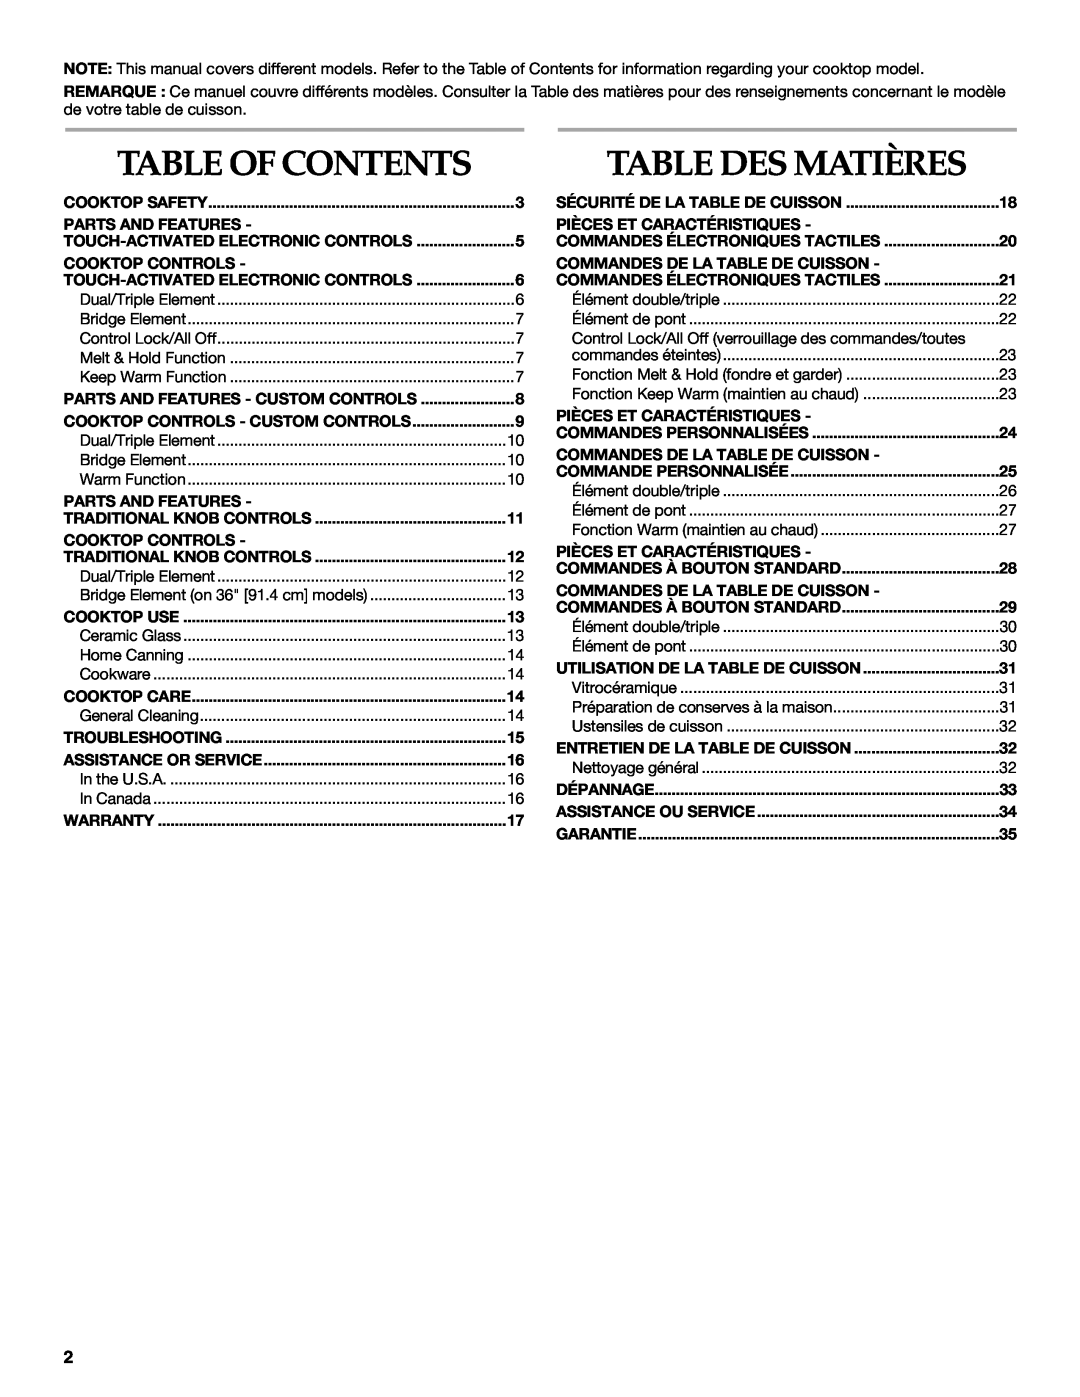 KitchenAid KECC506, KECC507, KECC056 manual Table Des Matières, Table Of Contents 